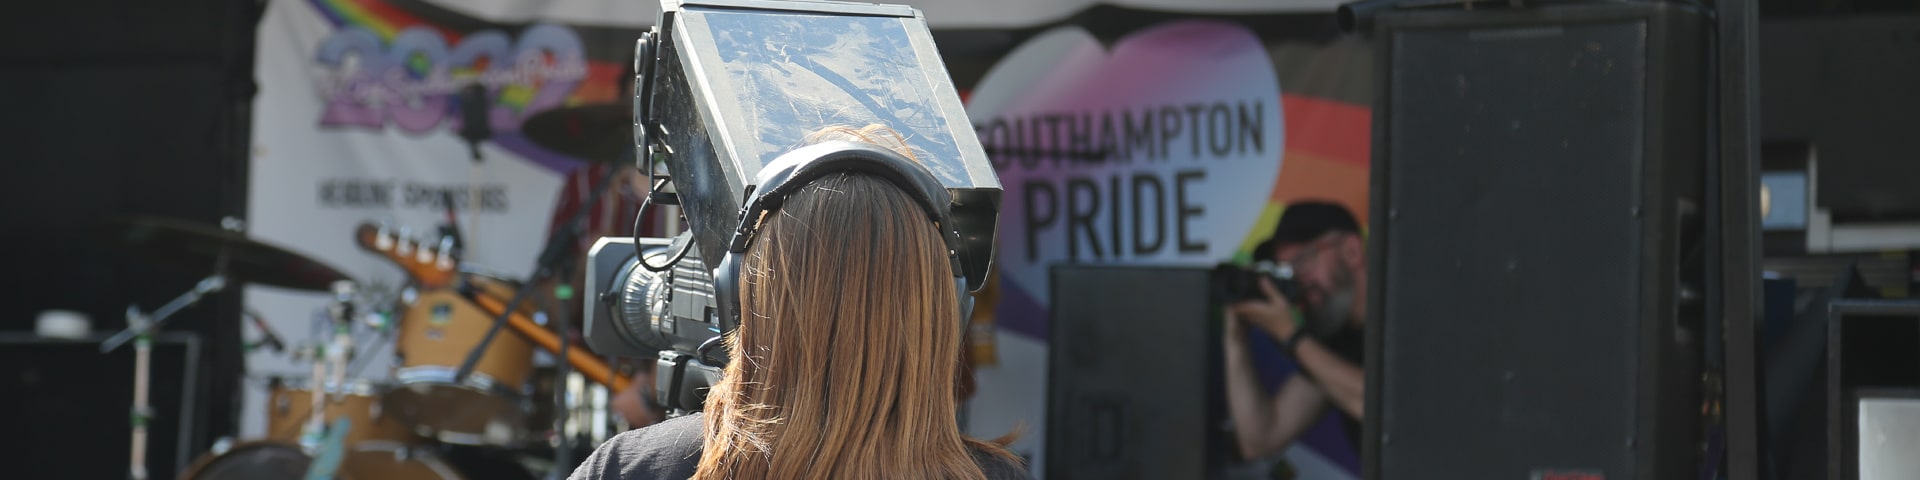 Solent Creatives crew filming at Southampton Pride